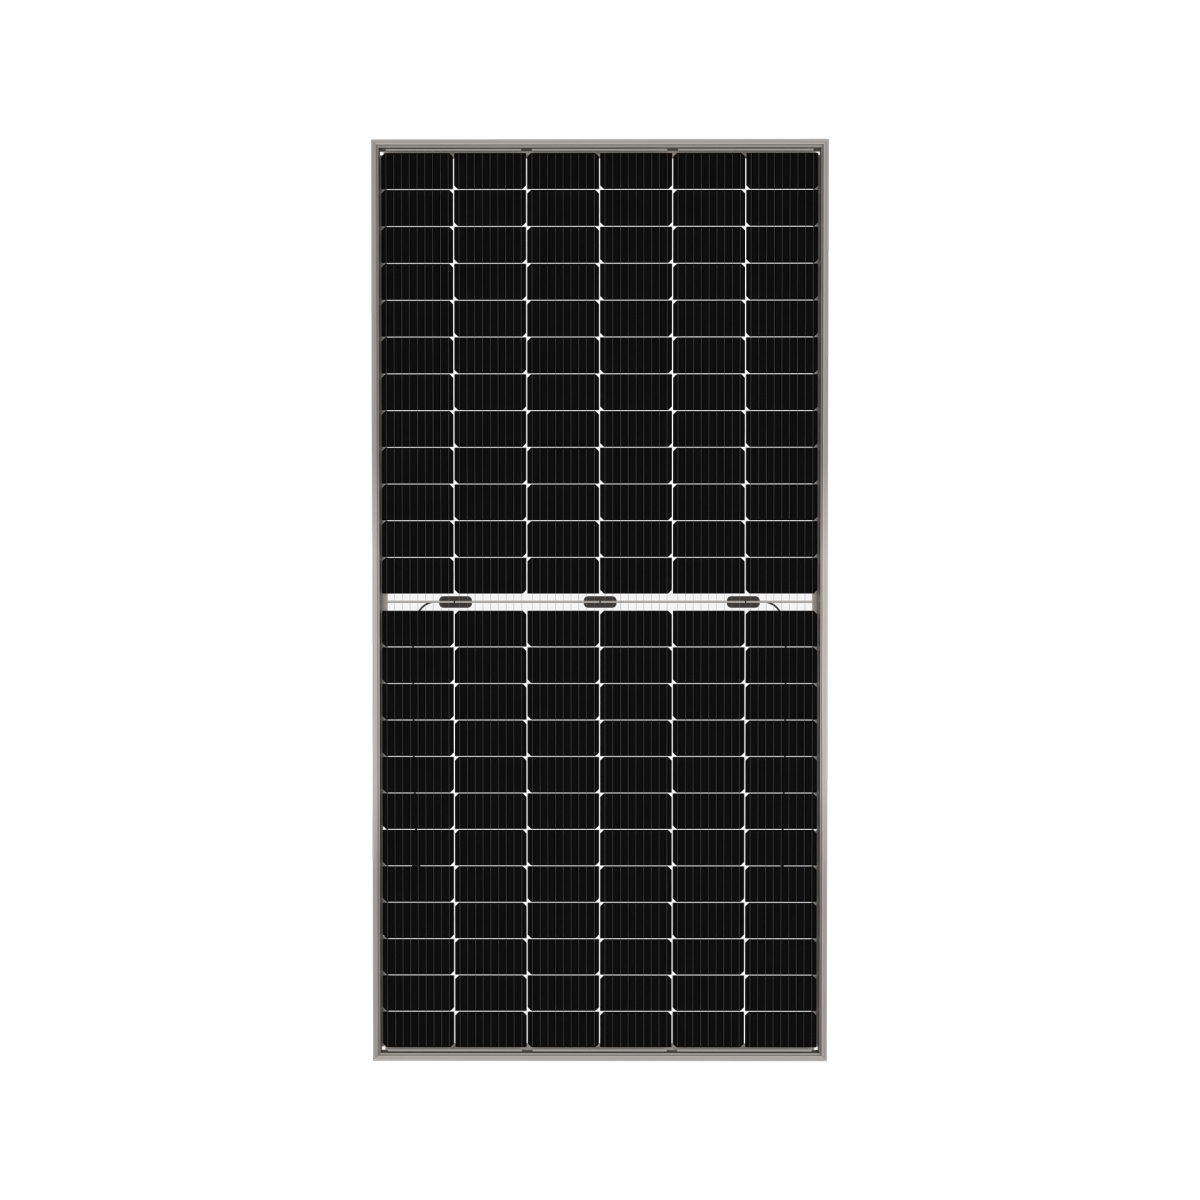 TommaTech 460 Watt 144 Percmono Bifacial Half-Cut Multi Busbar Solar Panel